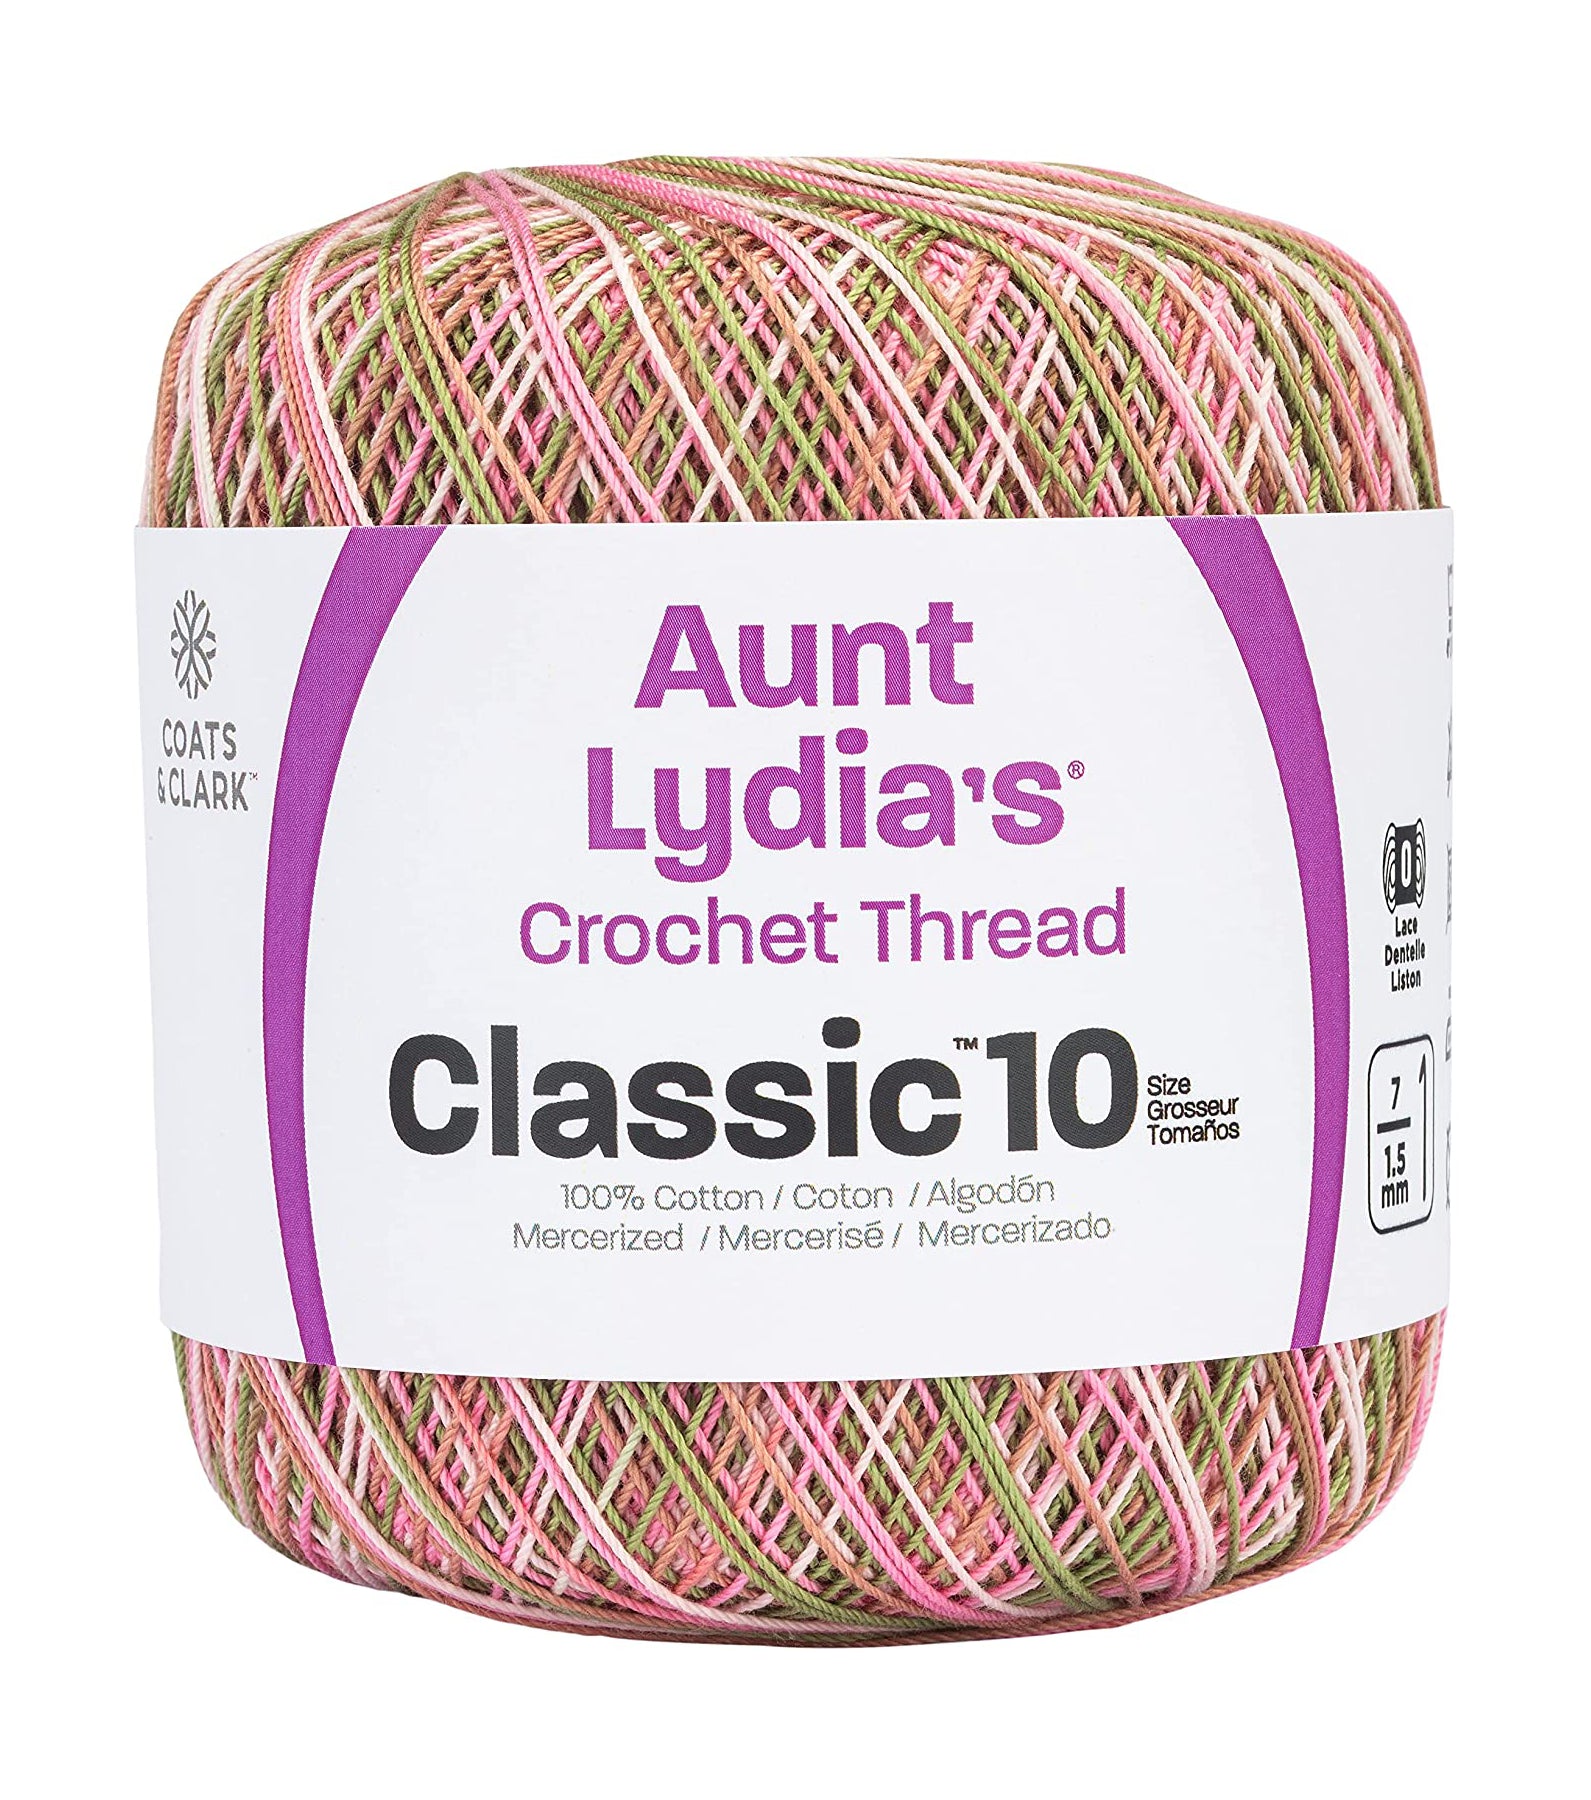 Aunt Lydia's, Other, Aunt Lydias Classic Crochet Thread